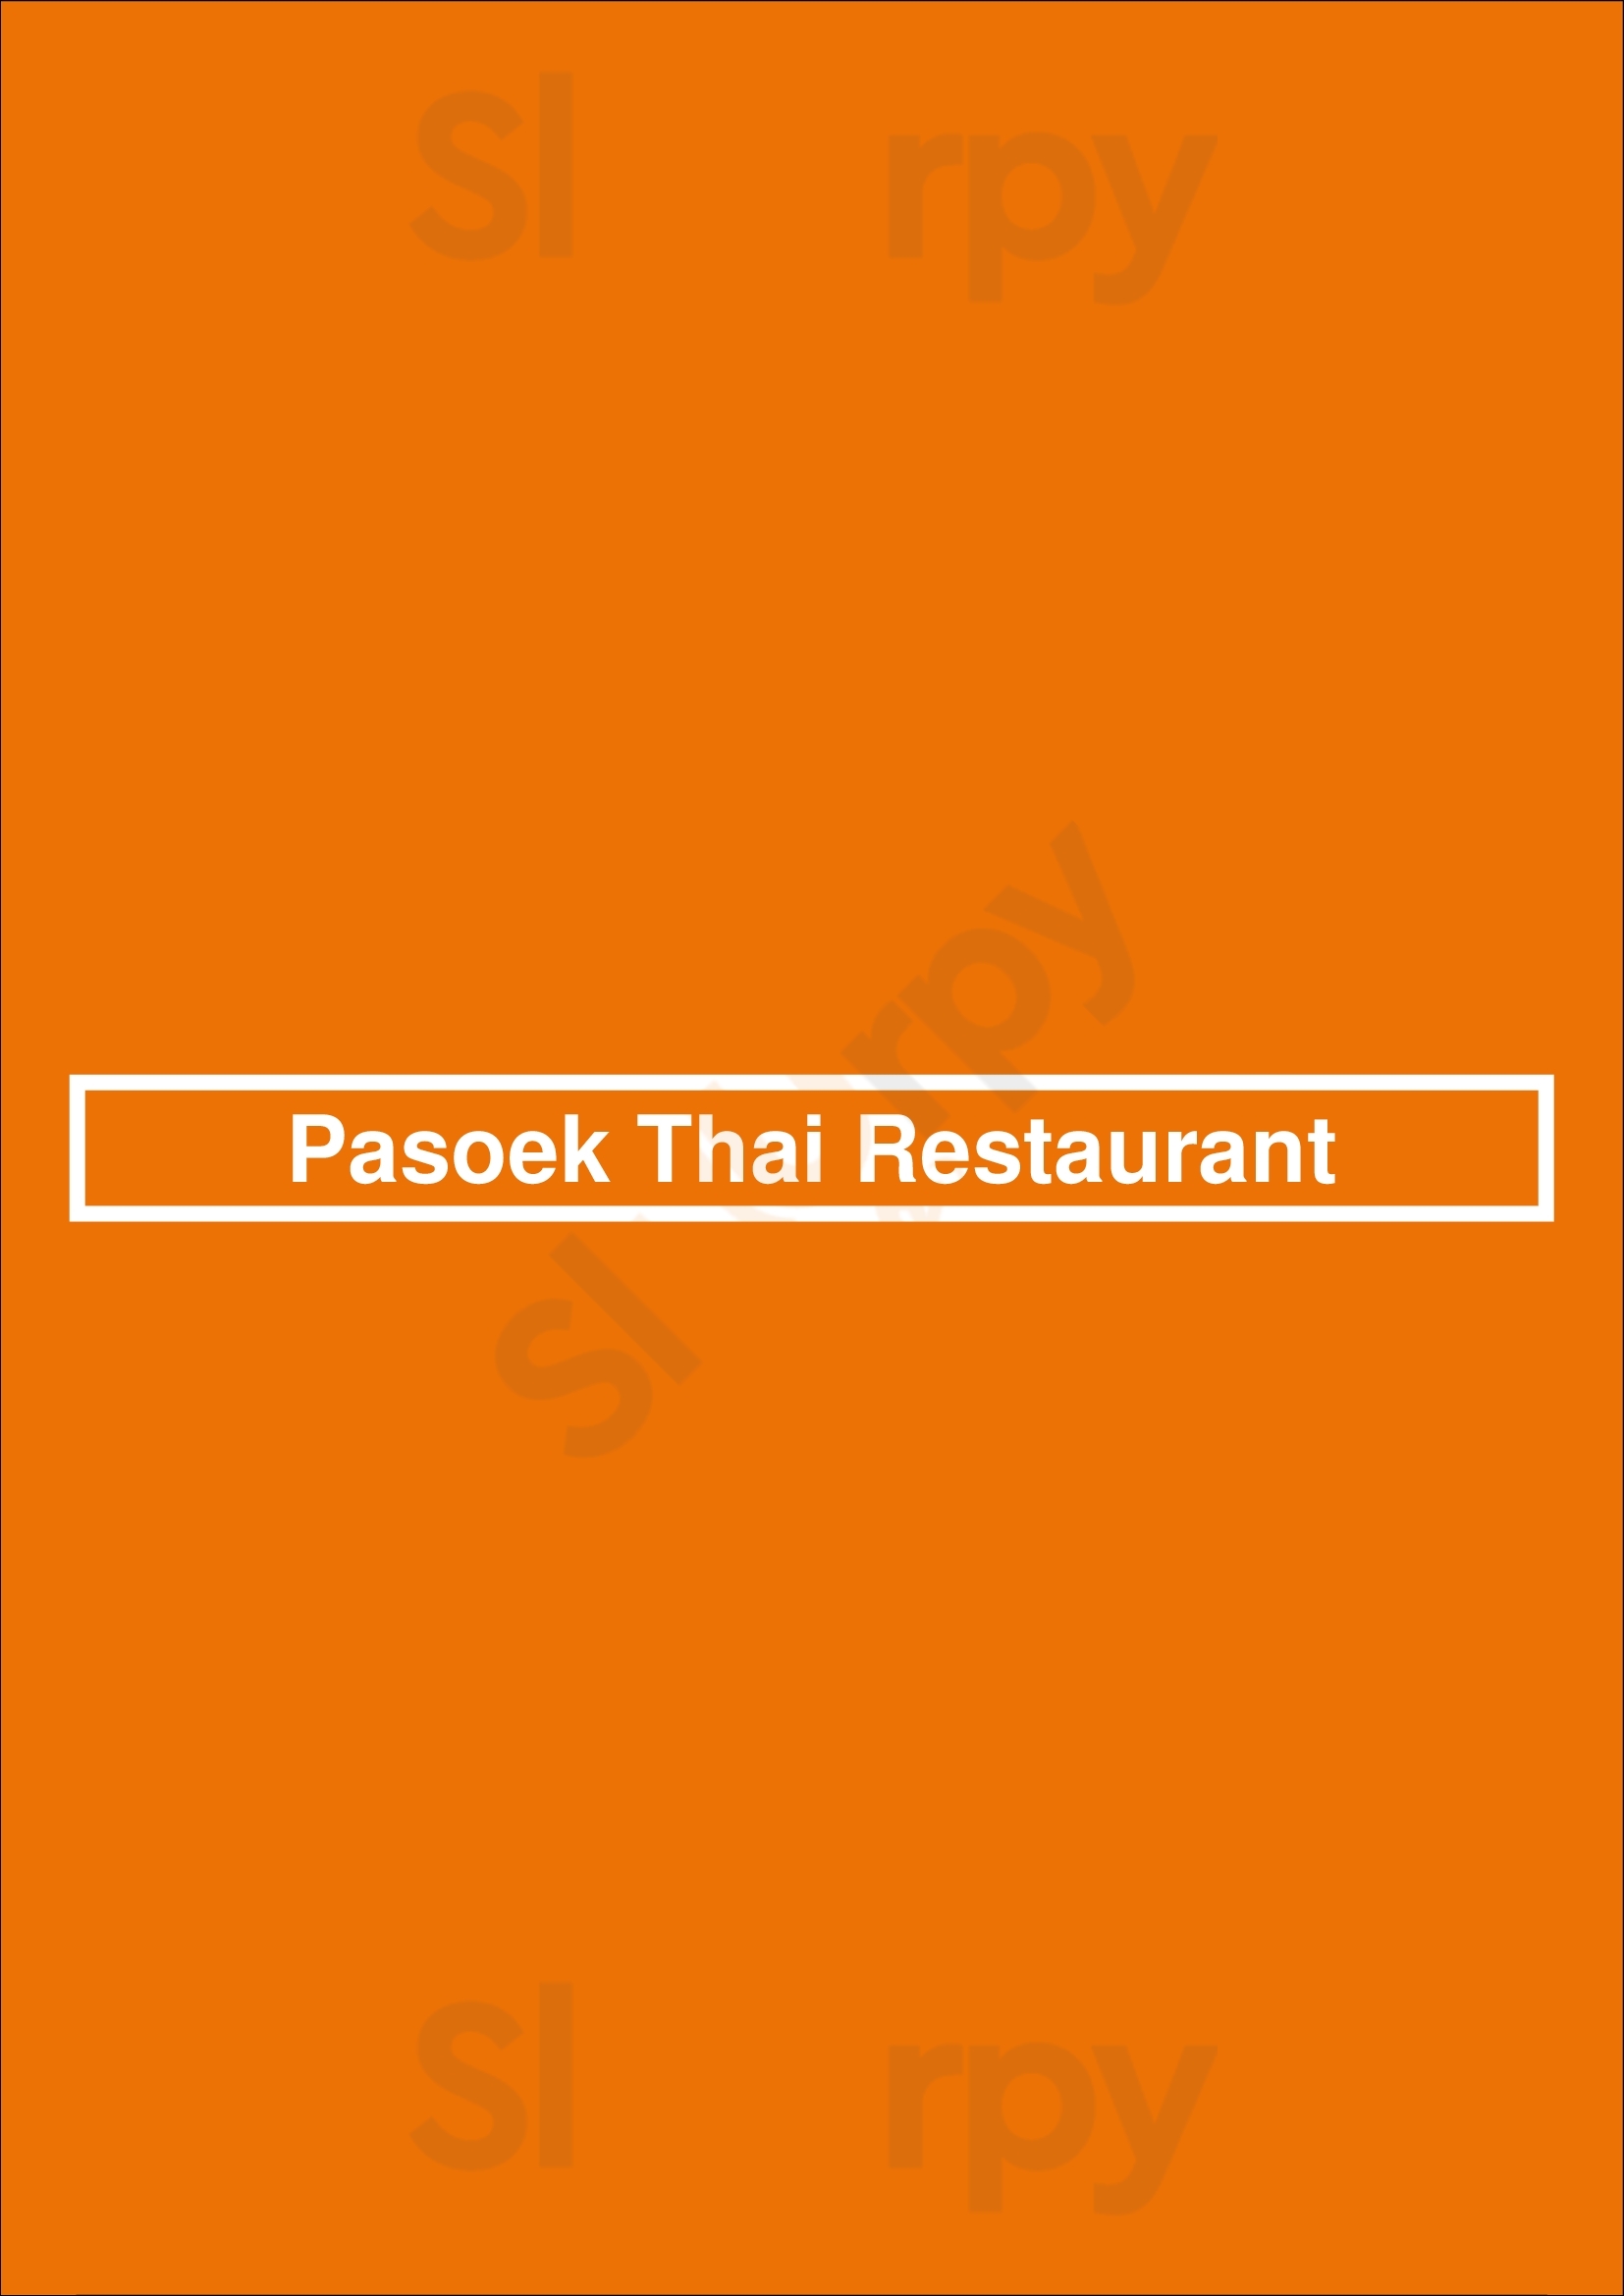 Pasoek Thai Restaurant Amsterdam Menu - 1